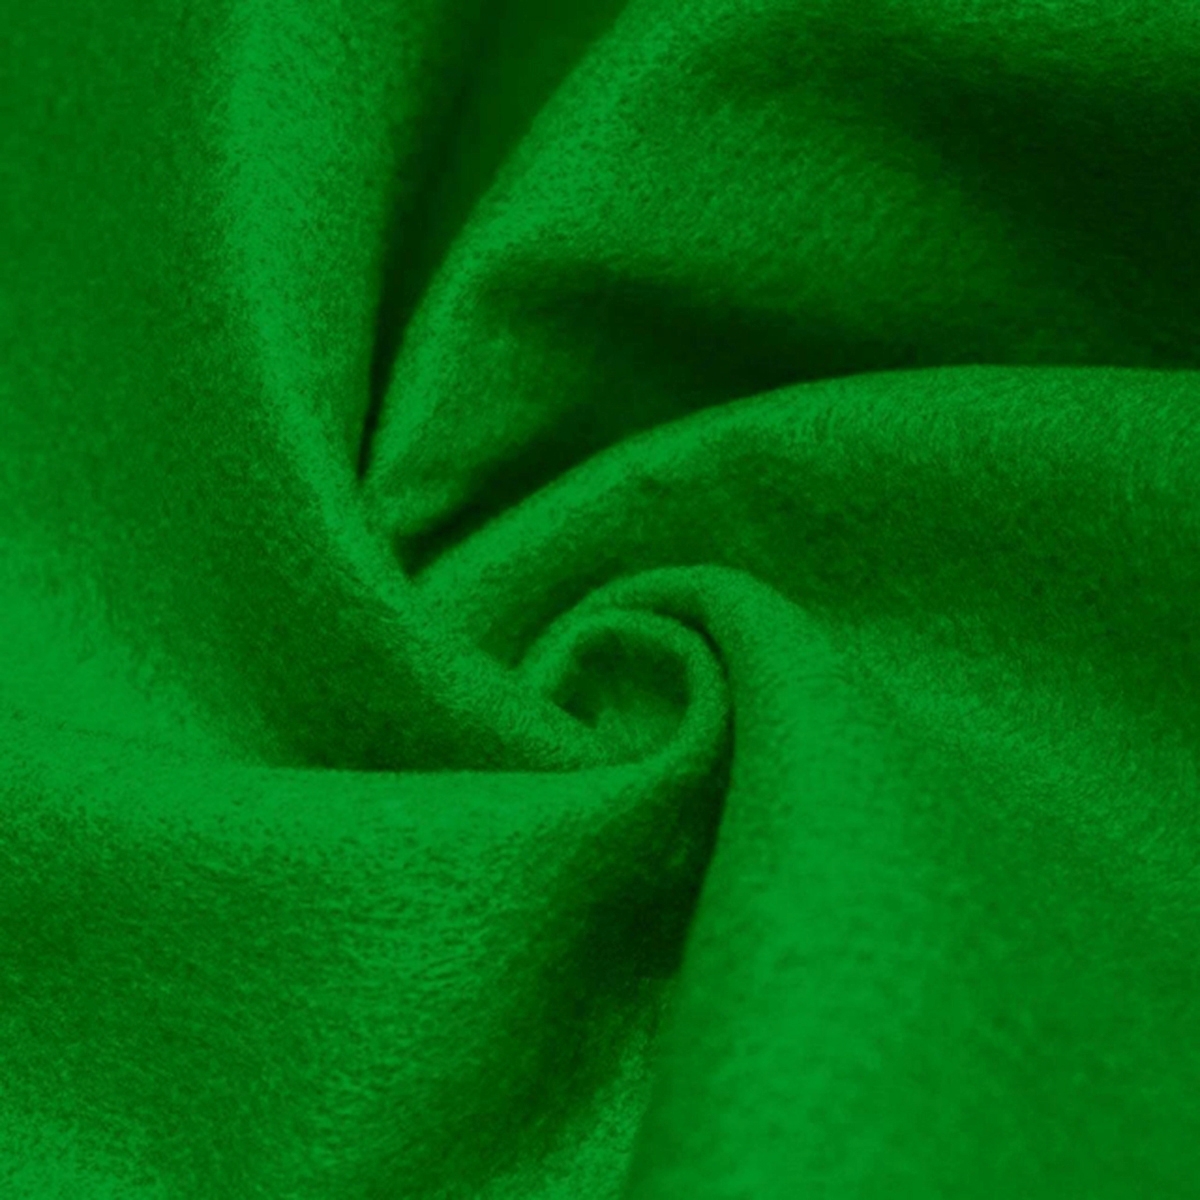 Bright Green Felt Fabric